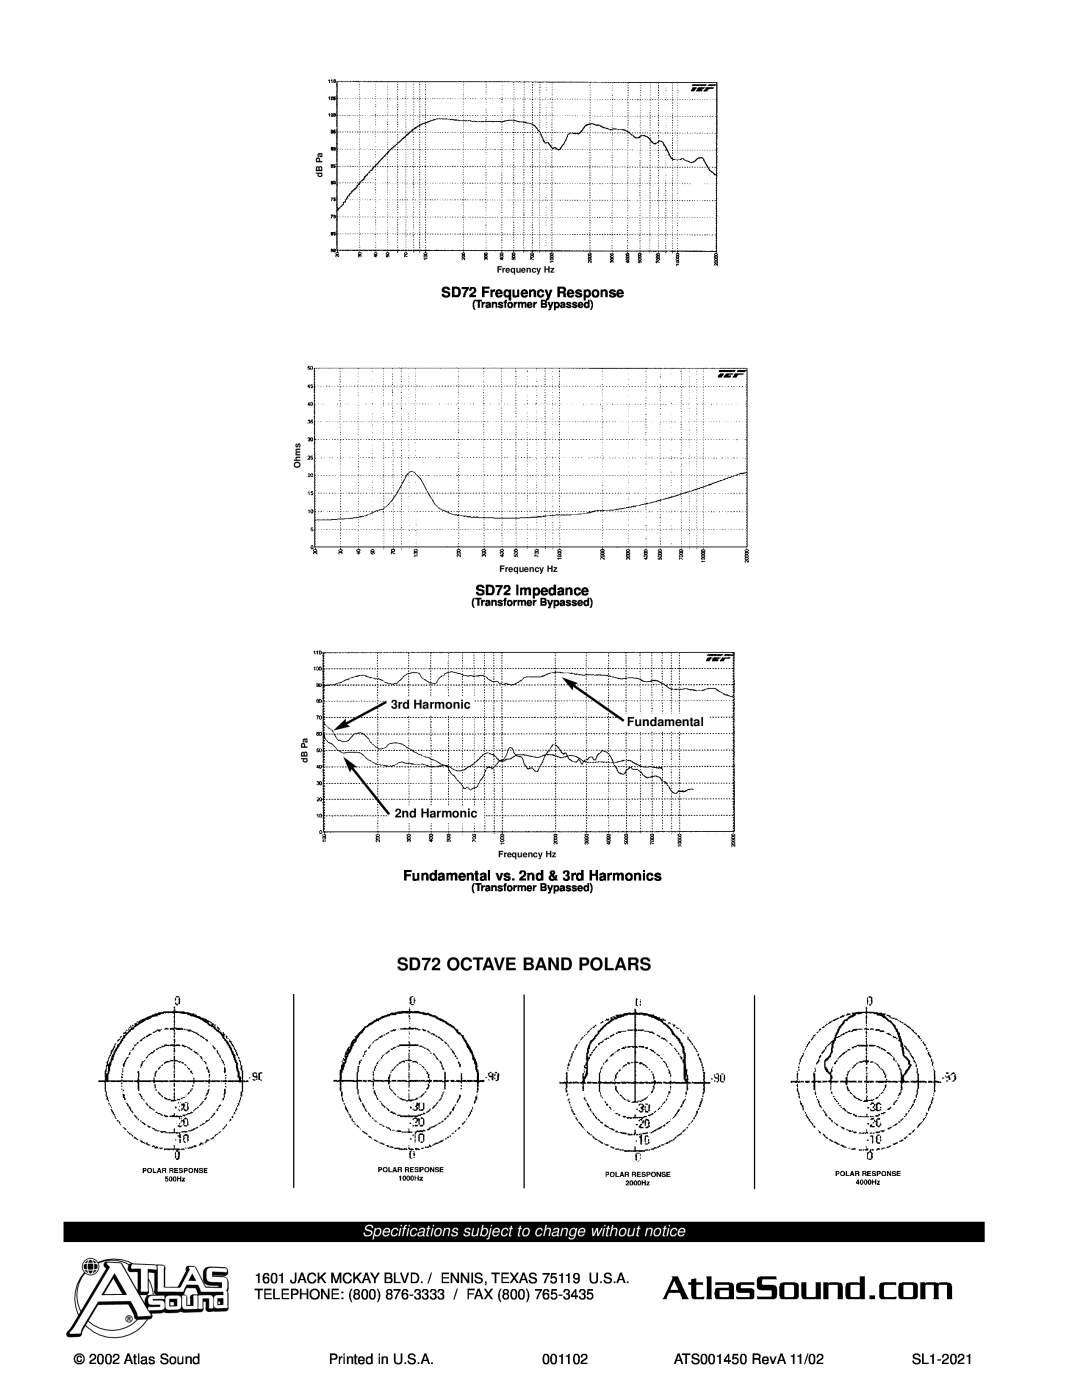 Atlas Sound SD72 OCTAVE BAND POLARS, SD72 Frequency Response, SD72 Impedance, Fundamental vs. 2nd & 3rd Harmonics 